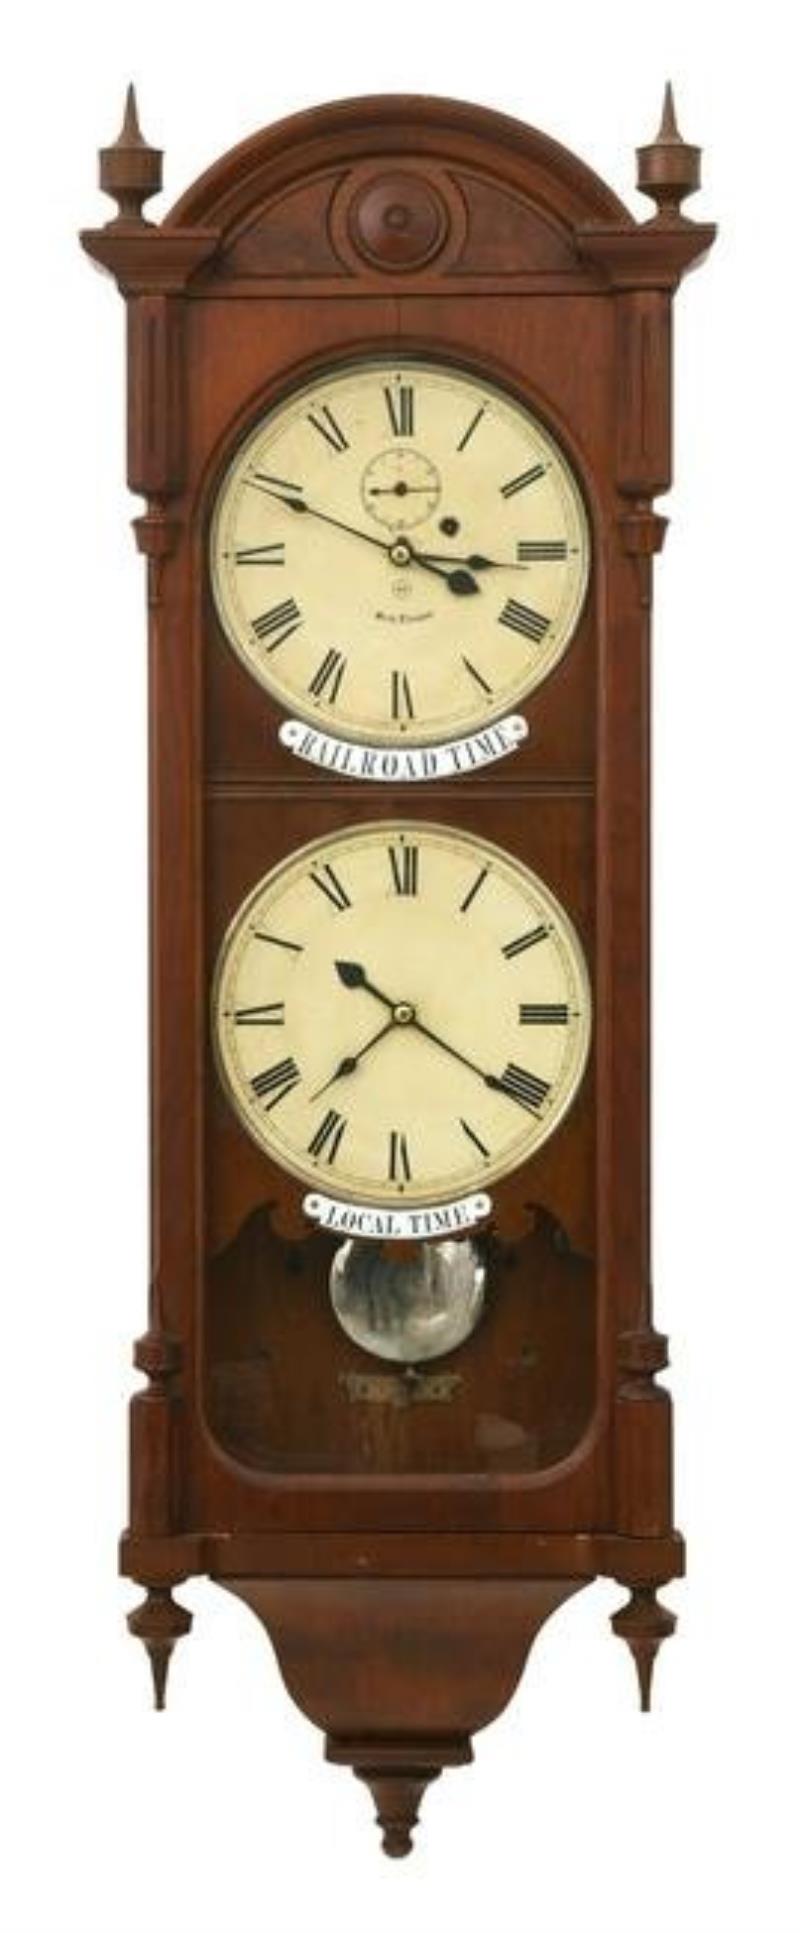 Seth Thomas "Regulator No. 6" Double Time Railroad Wall Clock